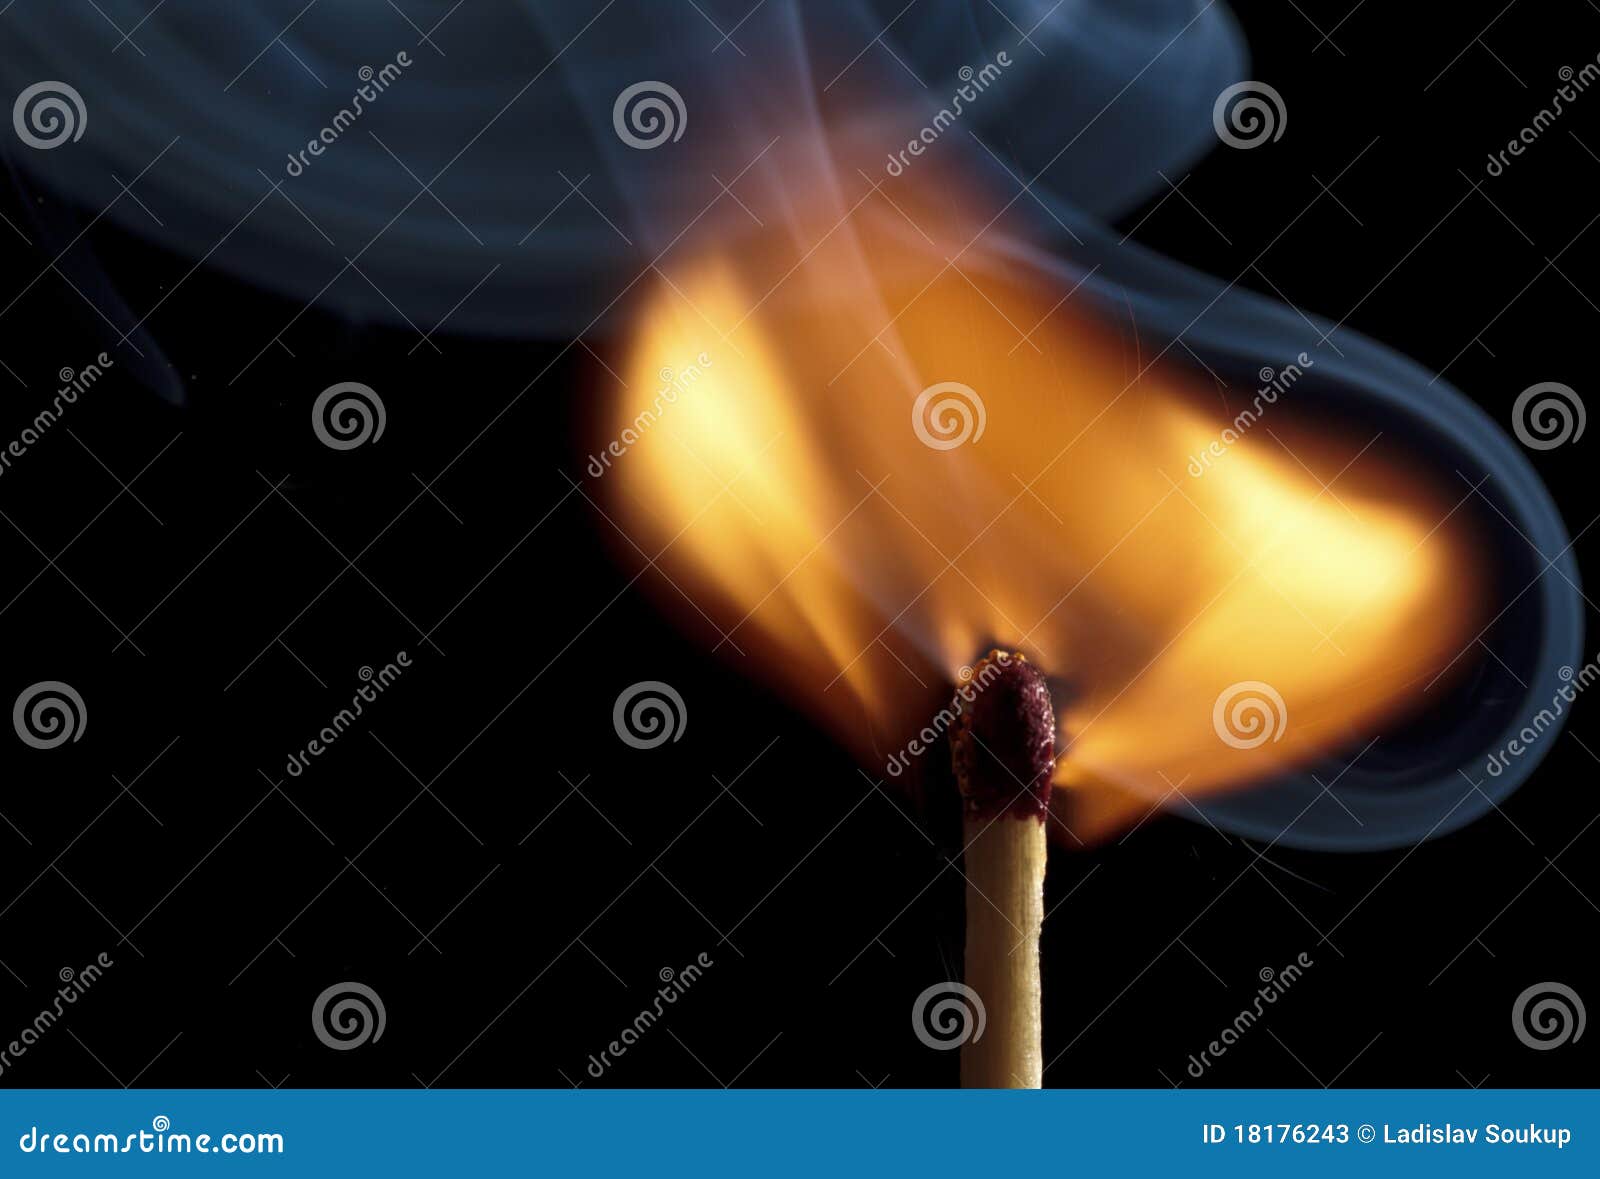 burning matchstick